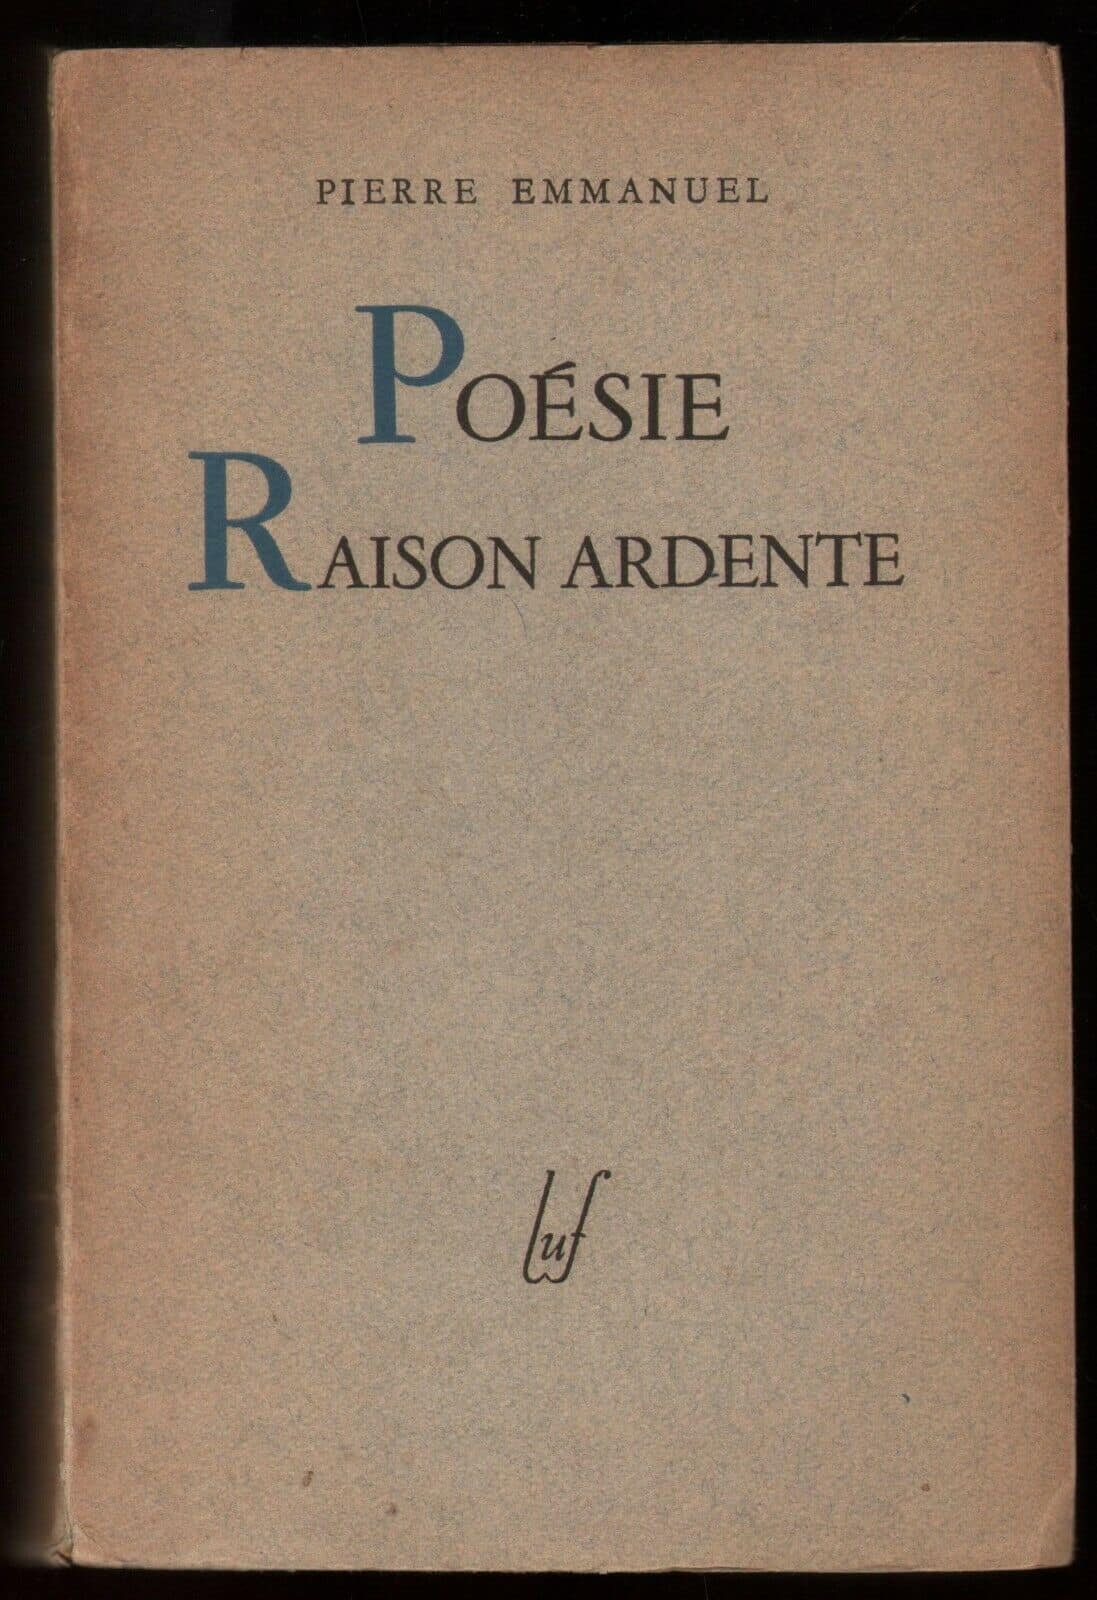 1948 Pierre Emmanuel Poesie Raison Ardente French Literature Signed France